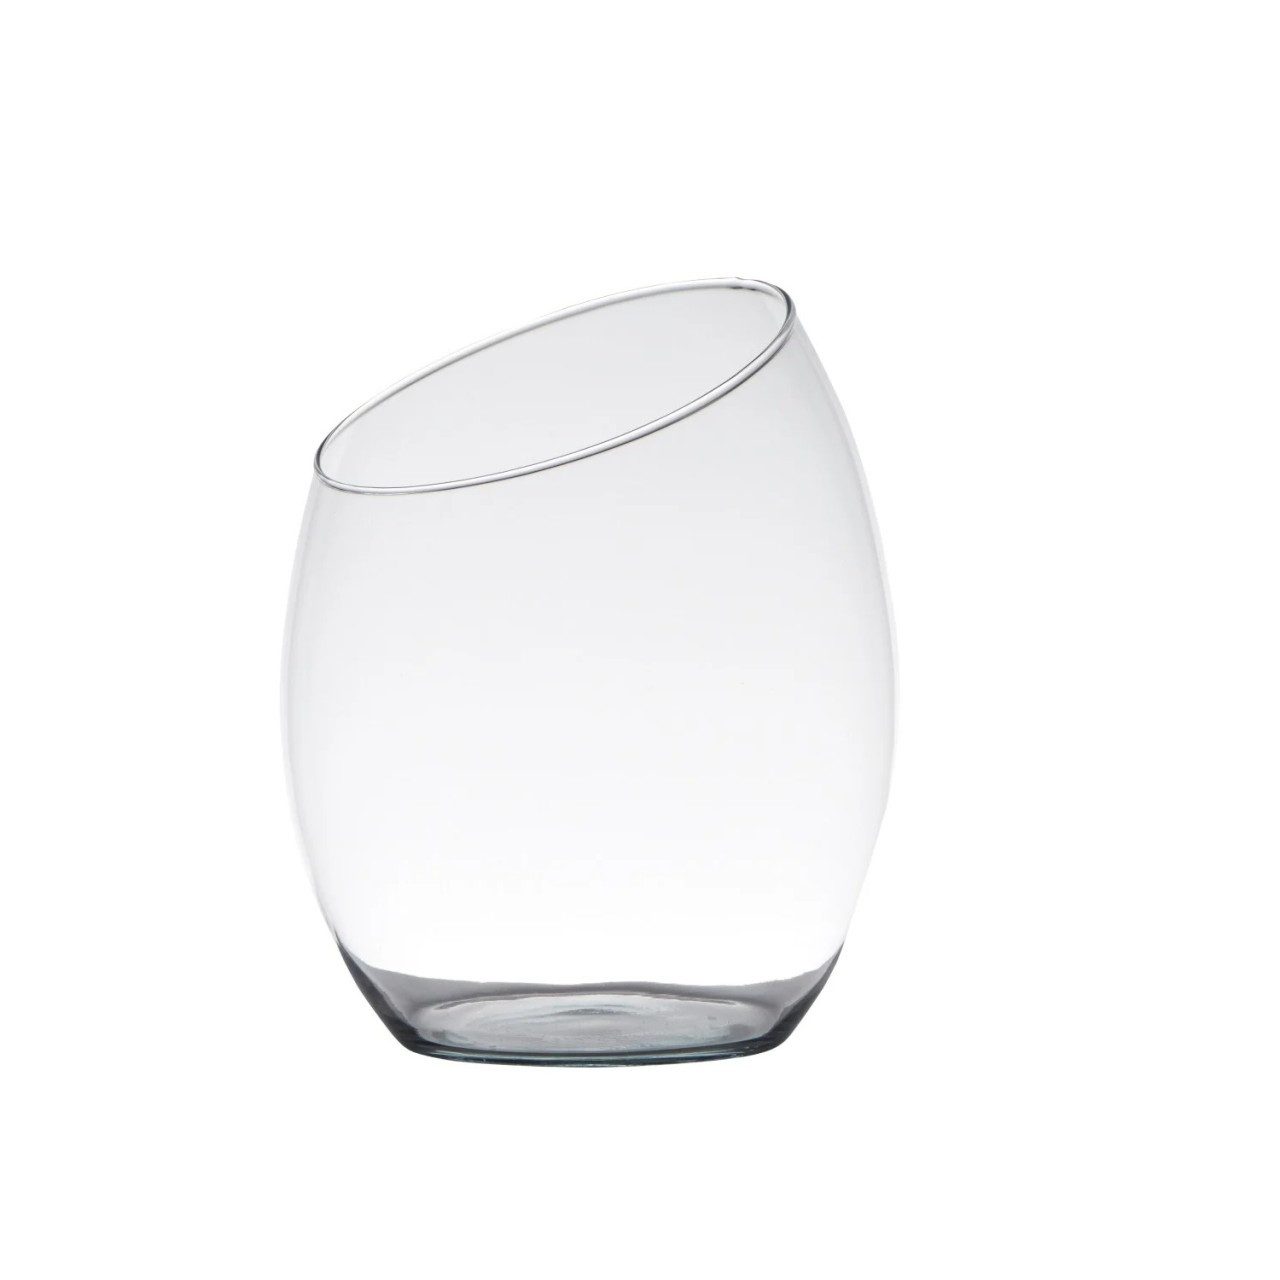 Hakbijl Glass Deko-Glas, Transparent H:20cm D:16.5cm Glas